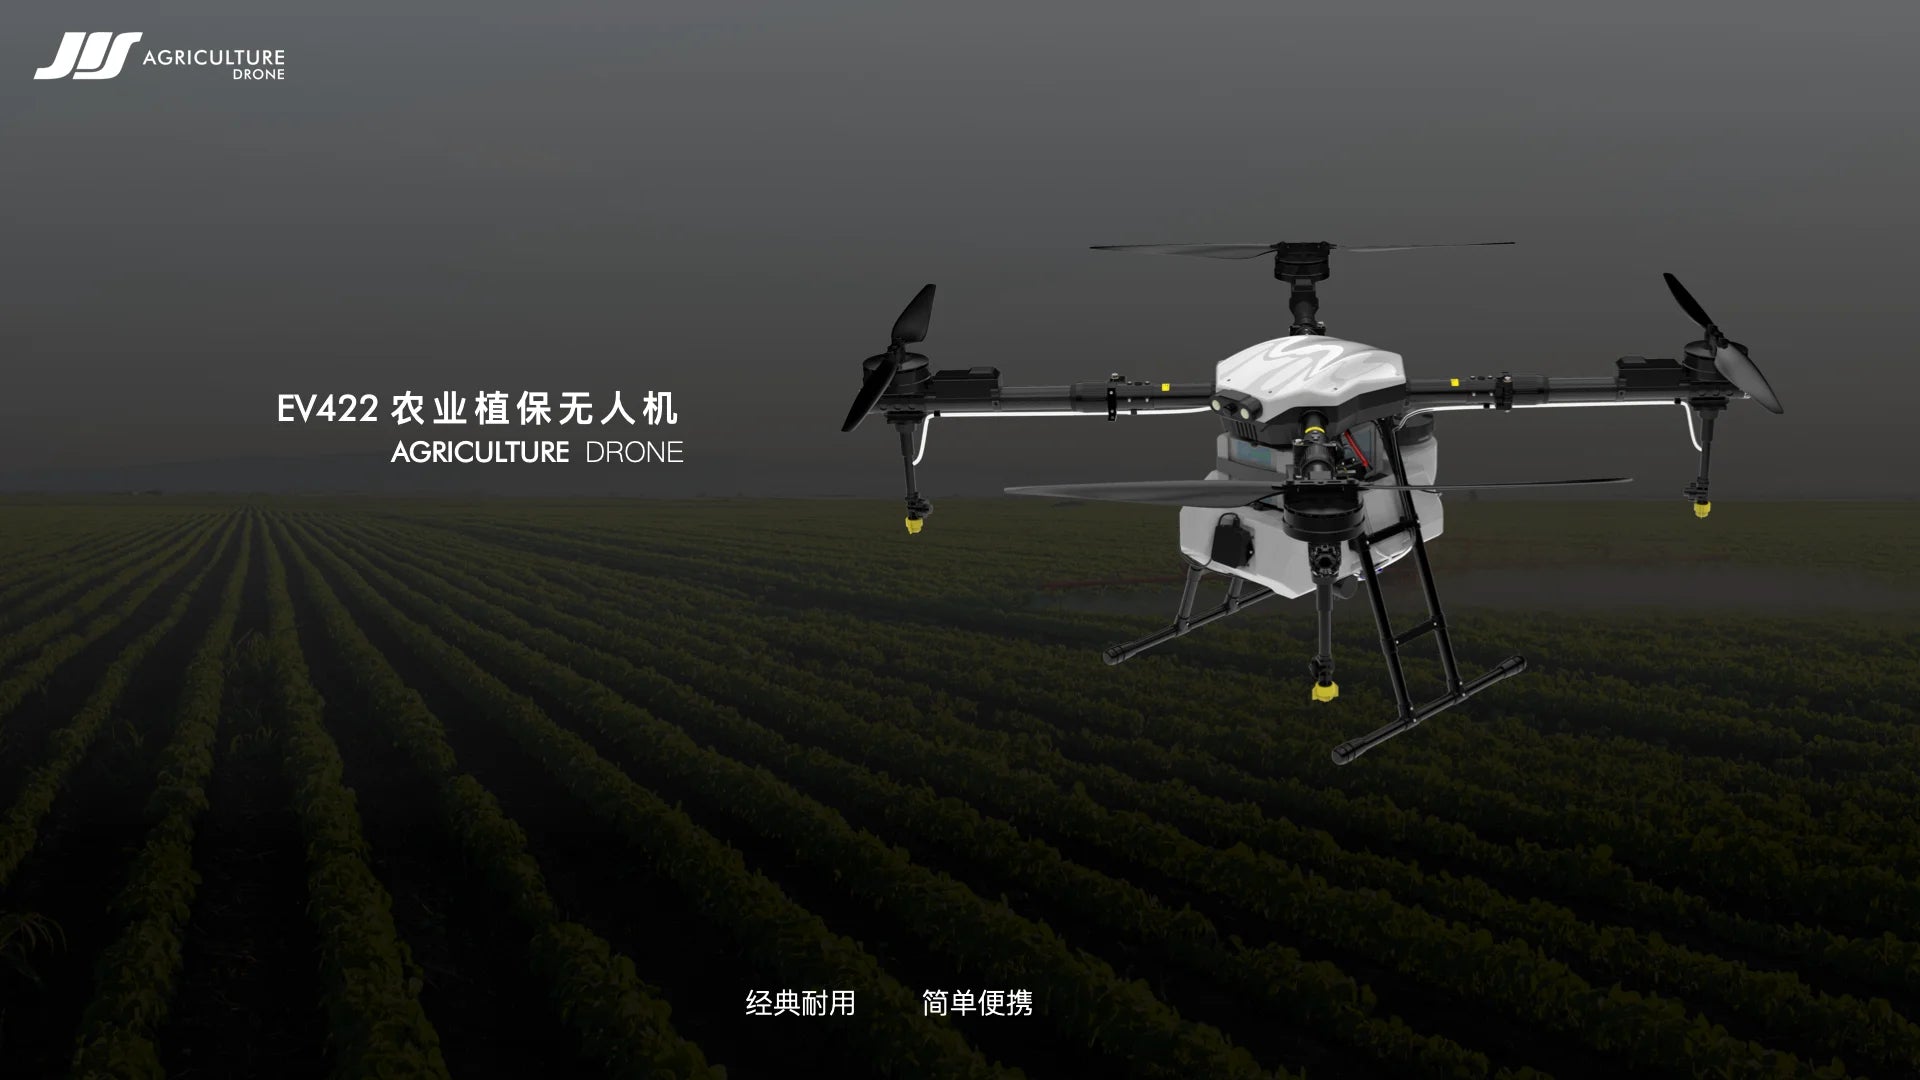 JIS EV422 22L Agriculture drone, AGRICULTURE DRONE EV422 R WlIR)A # AG